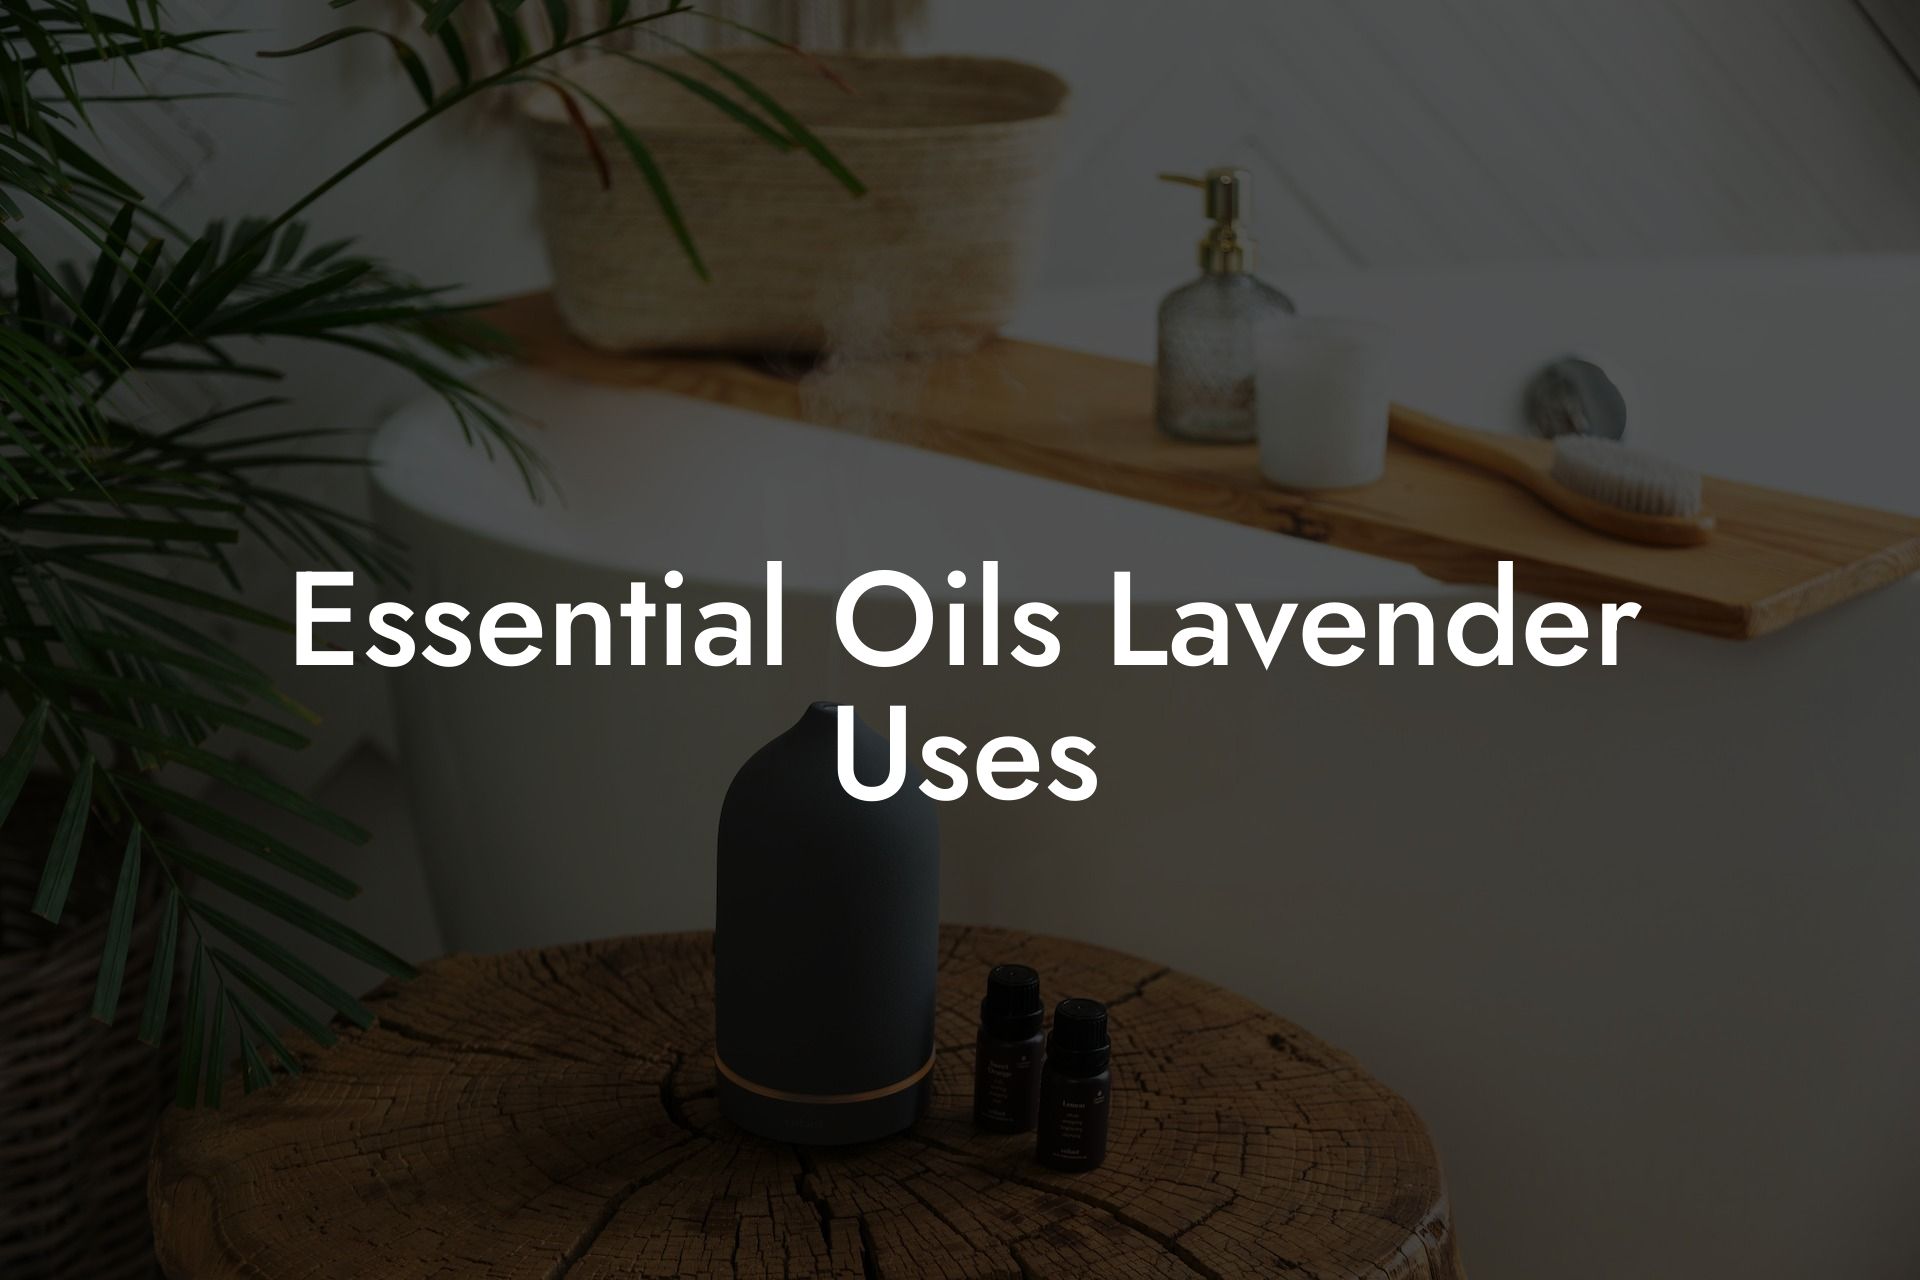 Essential Oils Lavender Uses